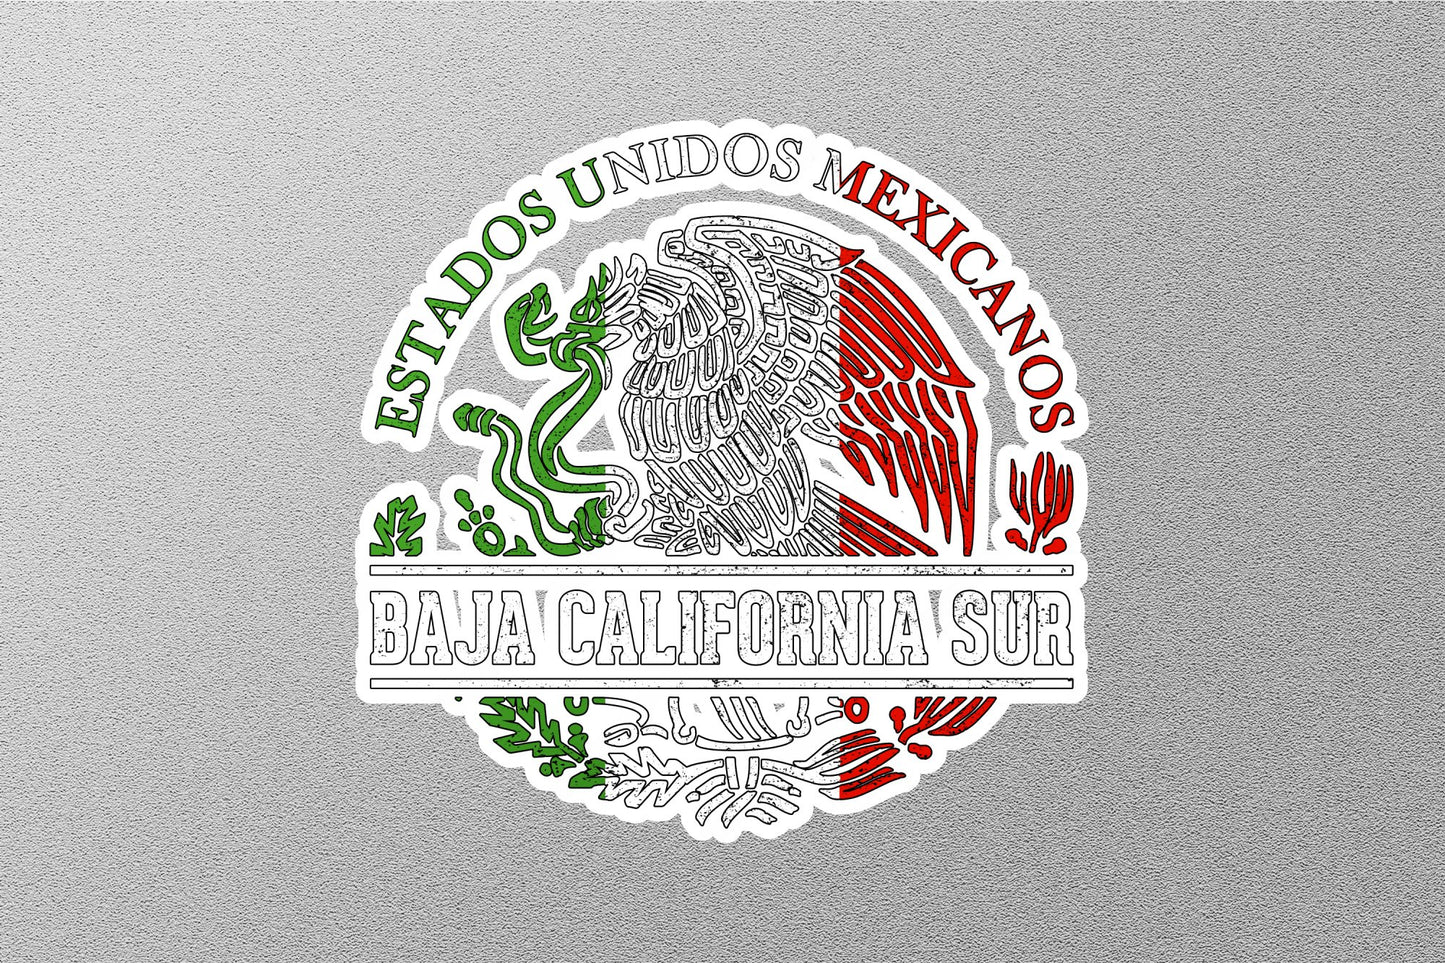 Baja California Sur Mexico State Stickers